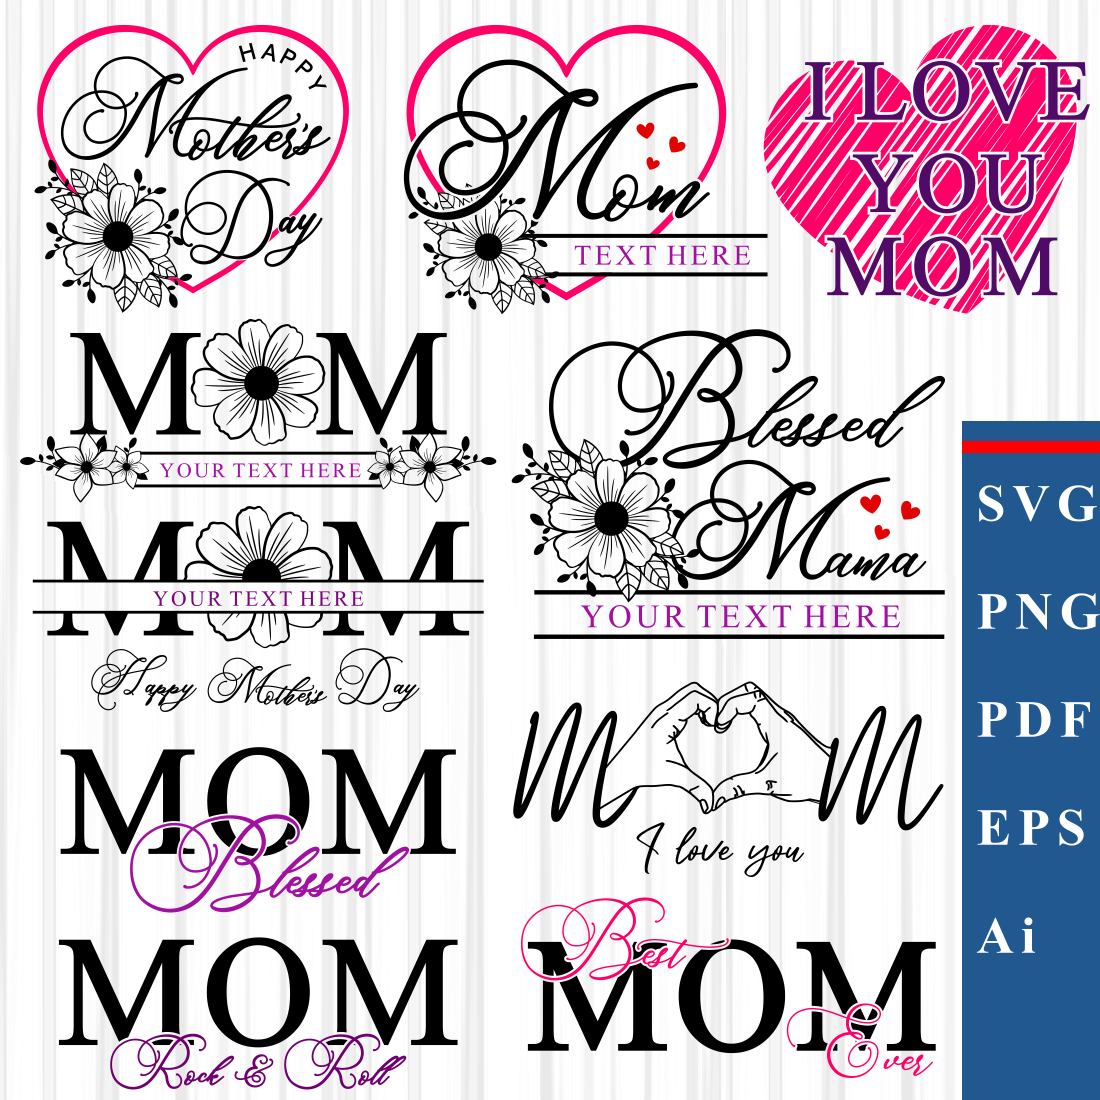 Mm, mm, letters with heart monogram, monogram wedding logo. love